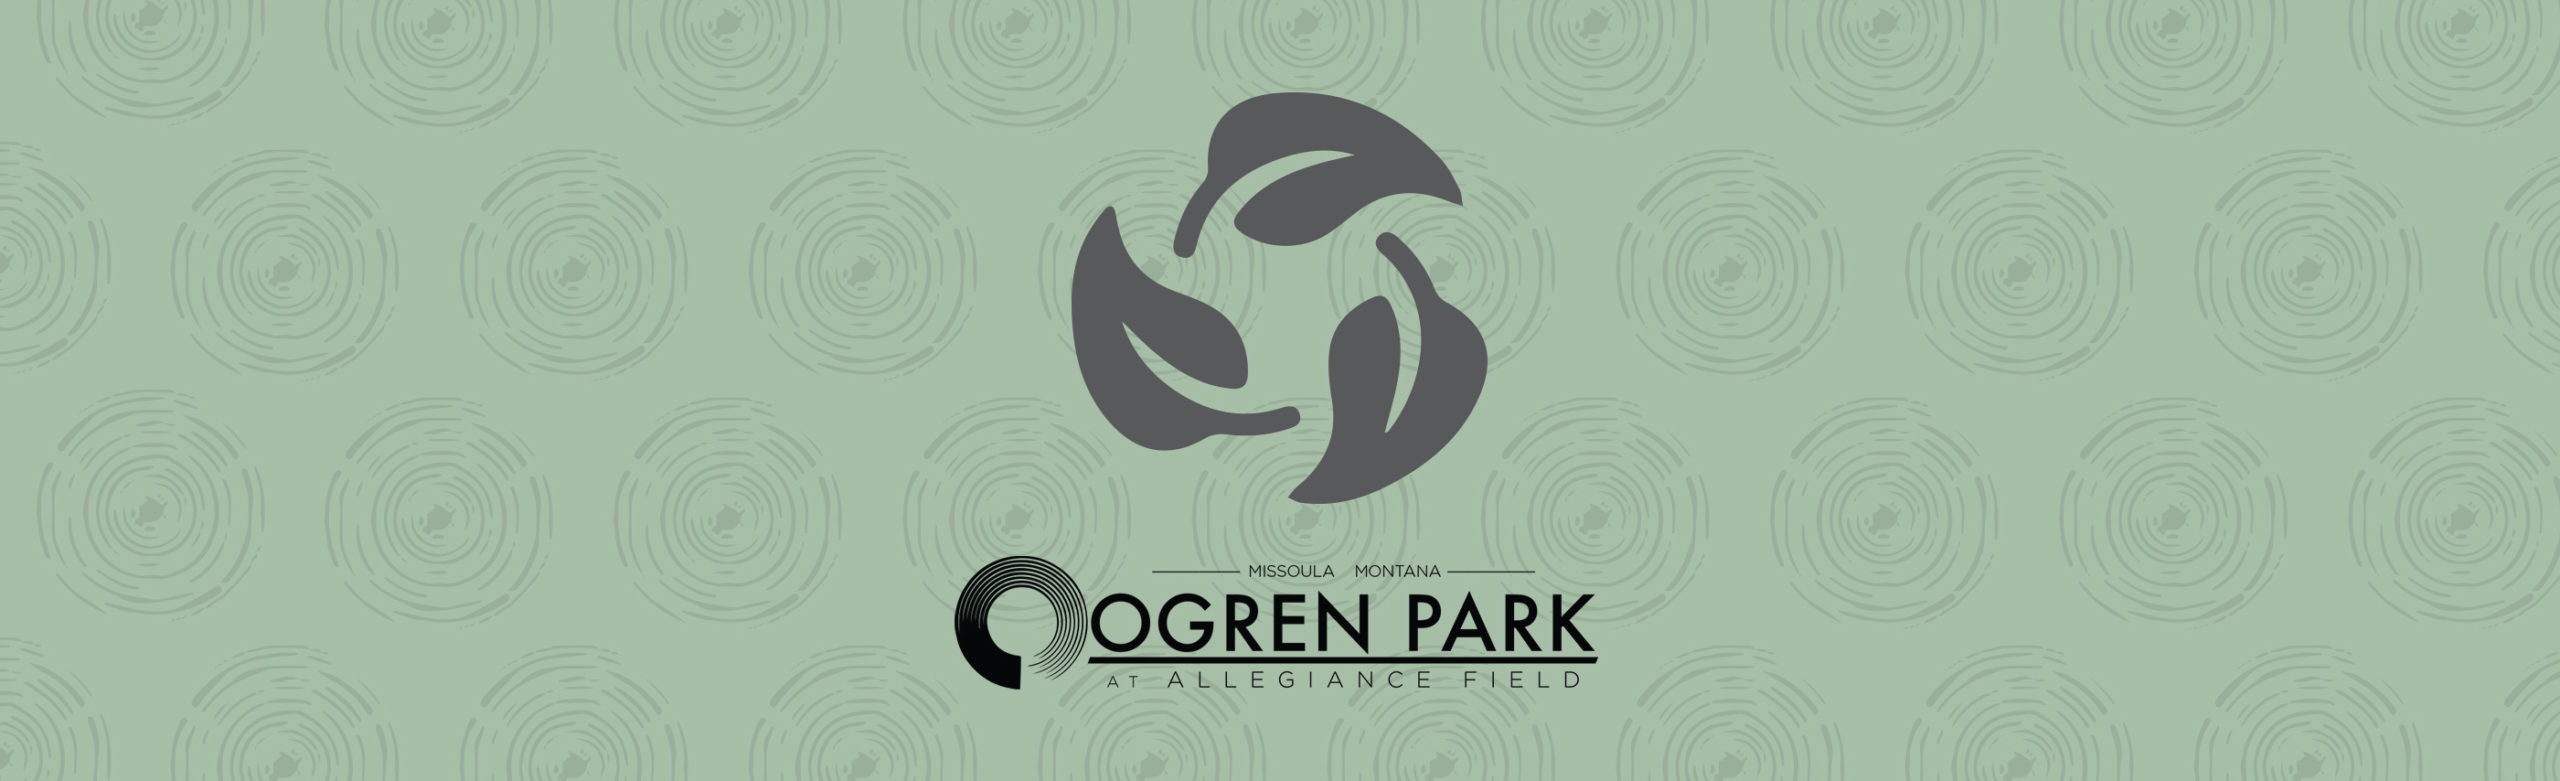 Going Green Guide for Mumford & Sons at Ogren Park 2019 Image